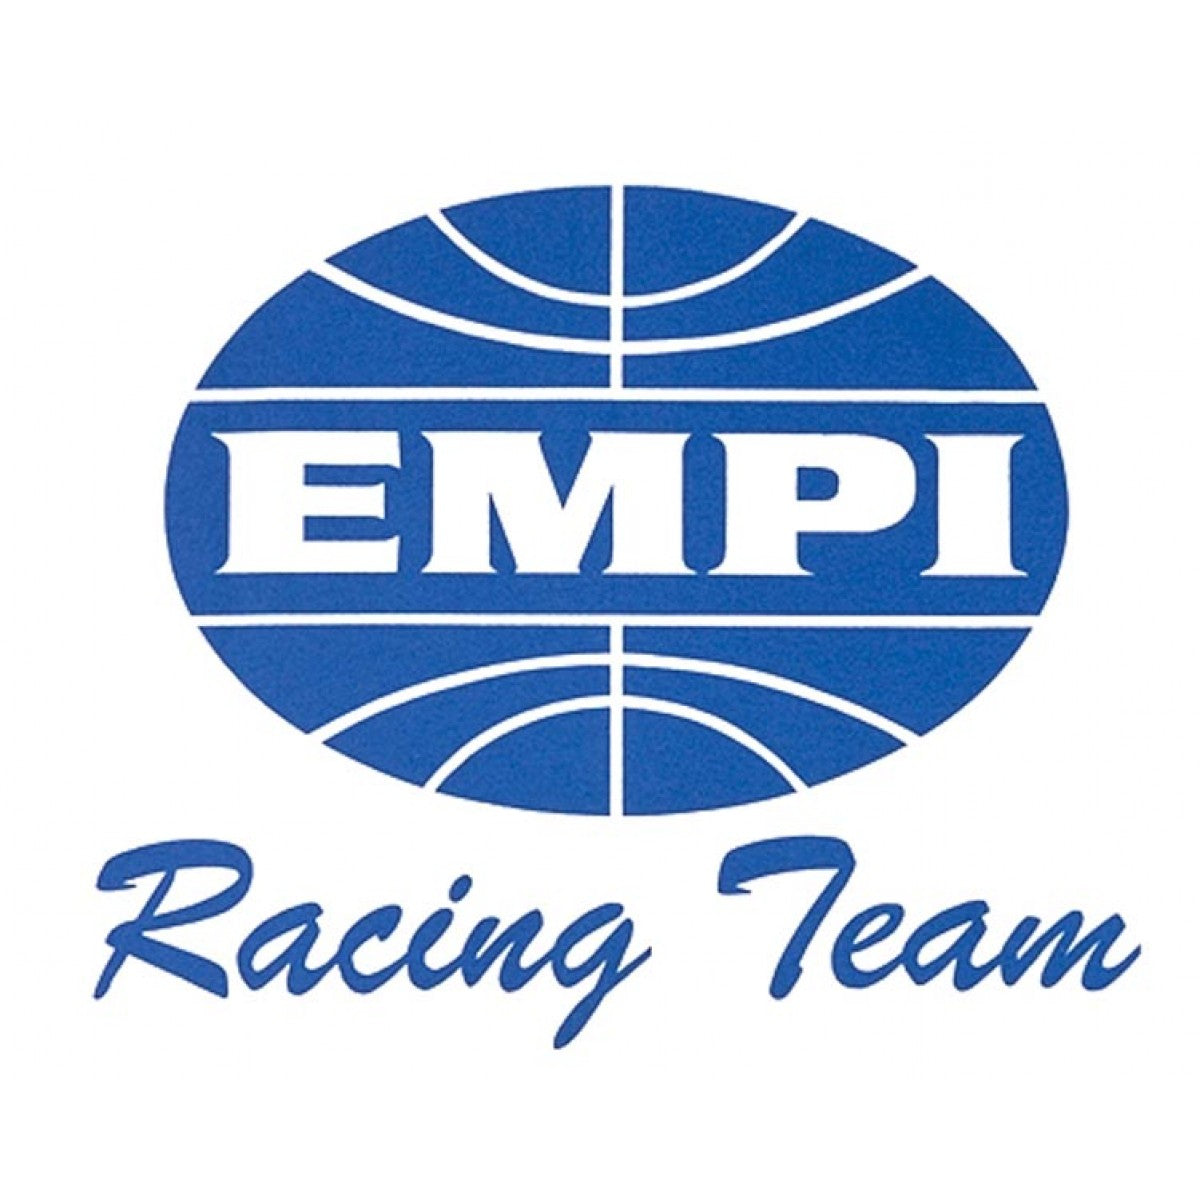 EMPI T-SHIRT RACING TEAM